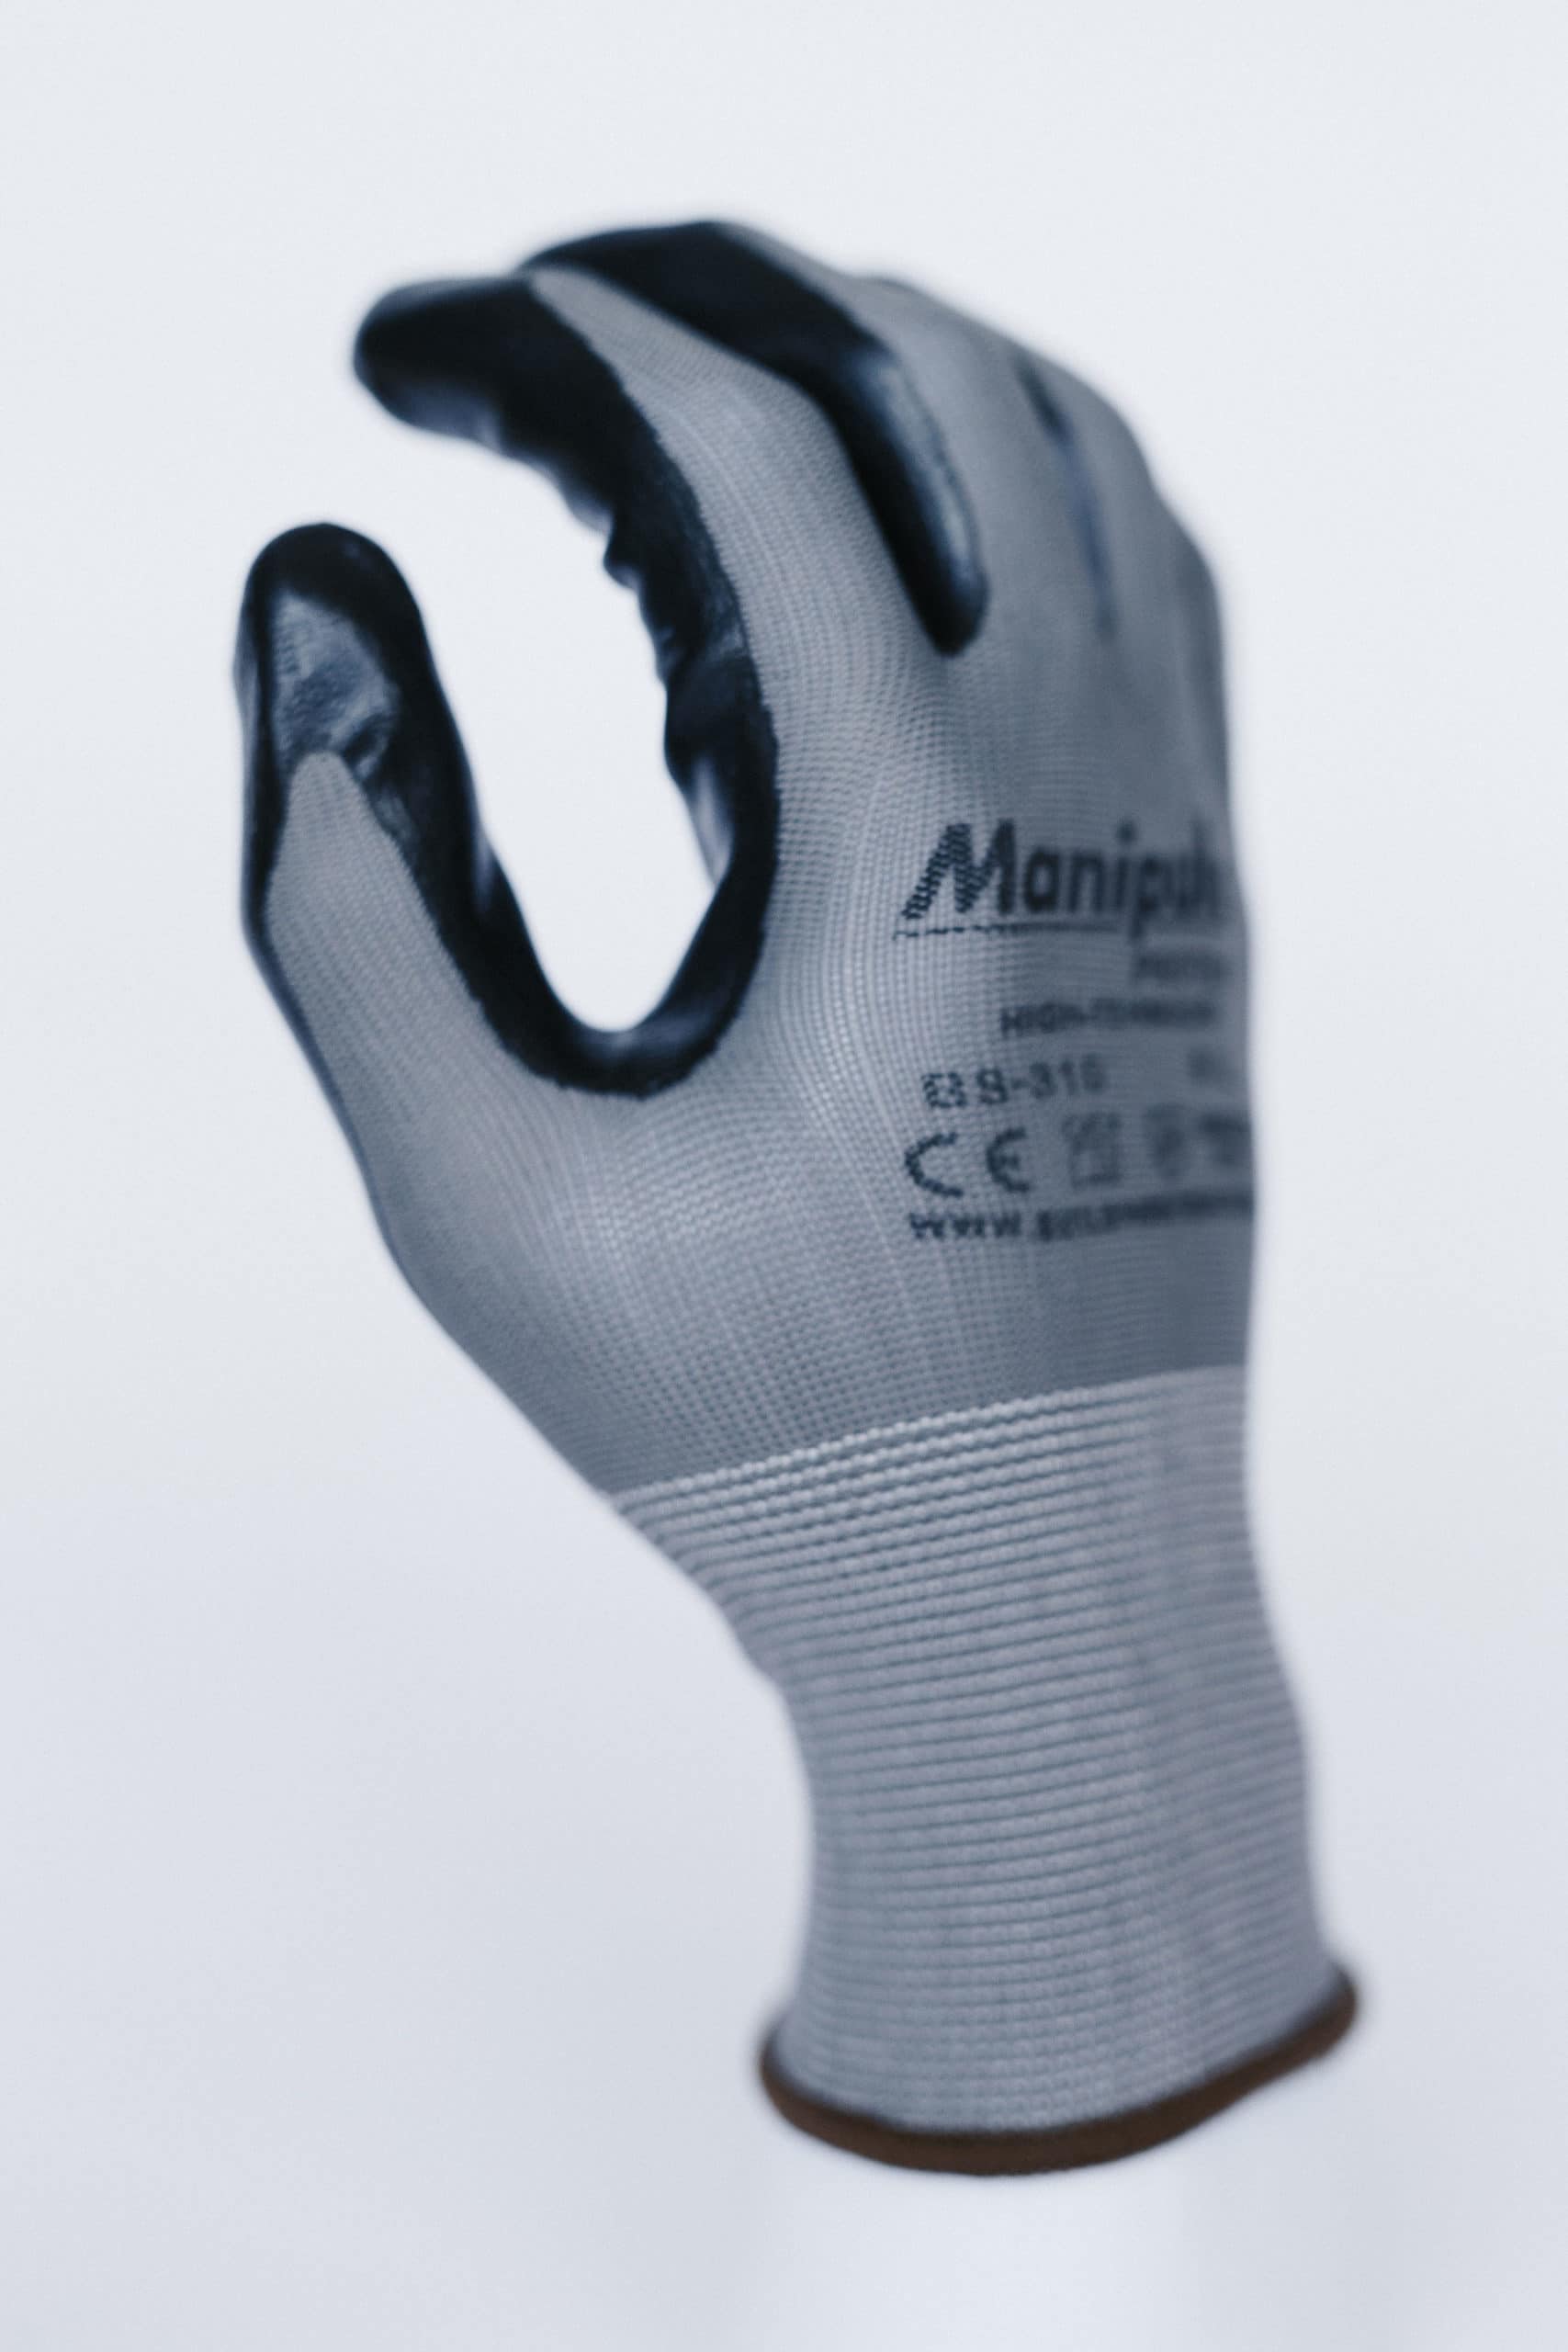 9 Length 72 Pair Gray Foam Nitrile Palm Coating Knit Wrist Cuff MAGID ROC GP560 Nylon Glove Size 7 